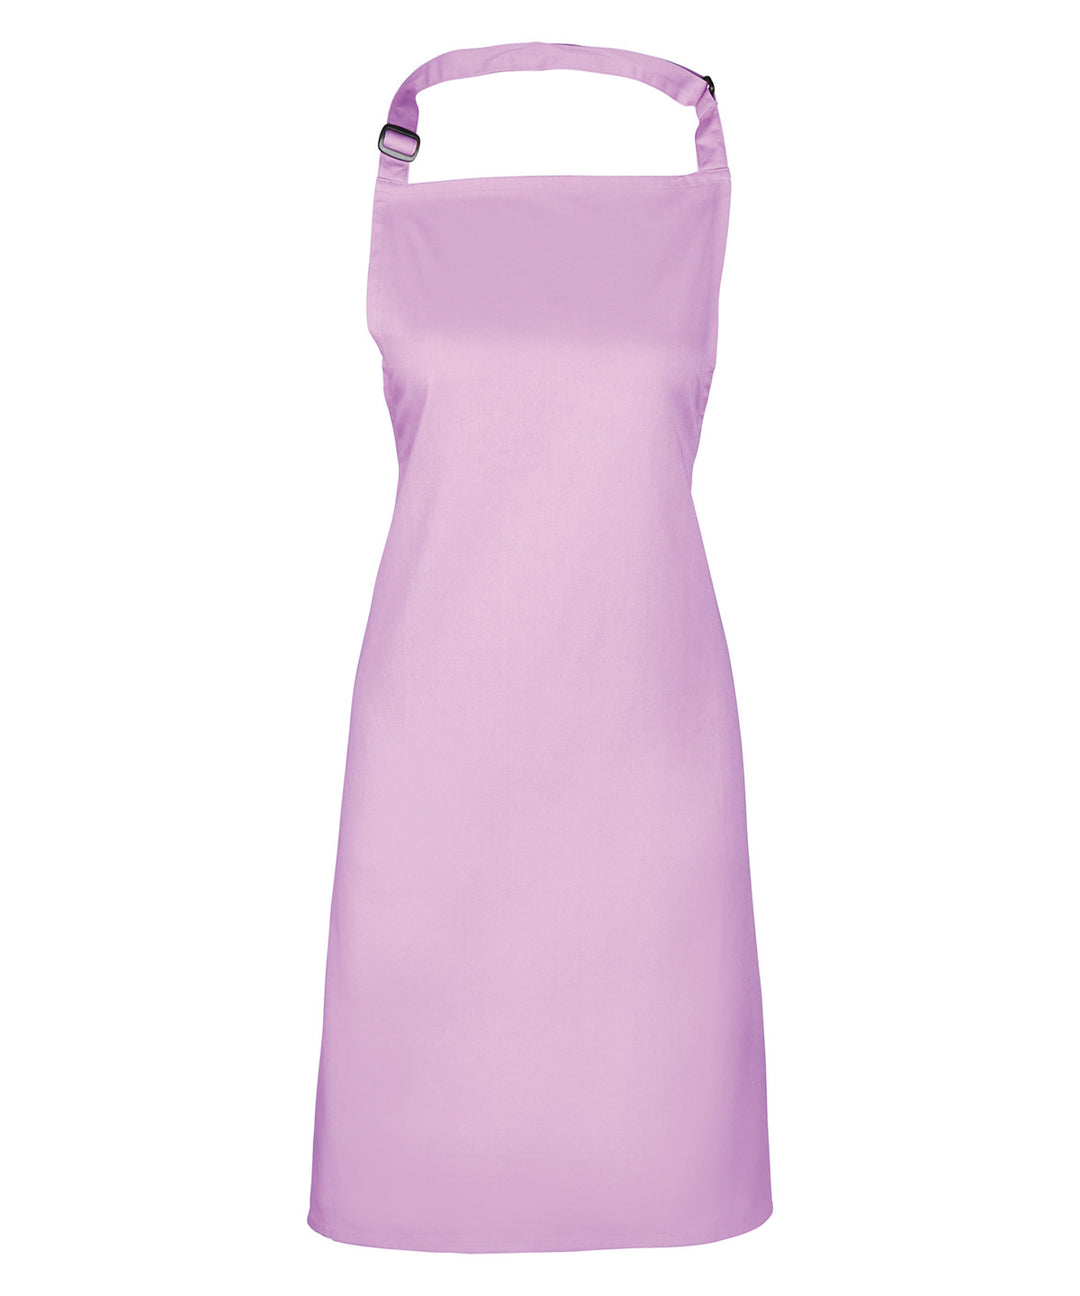 a women's purple dress with straps